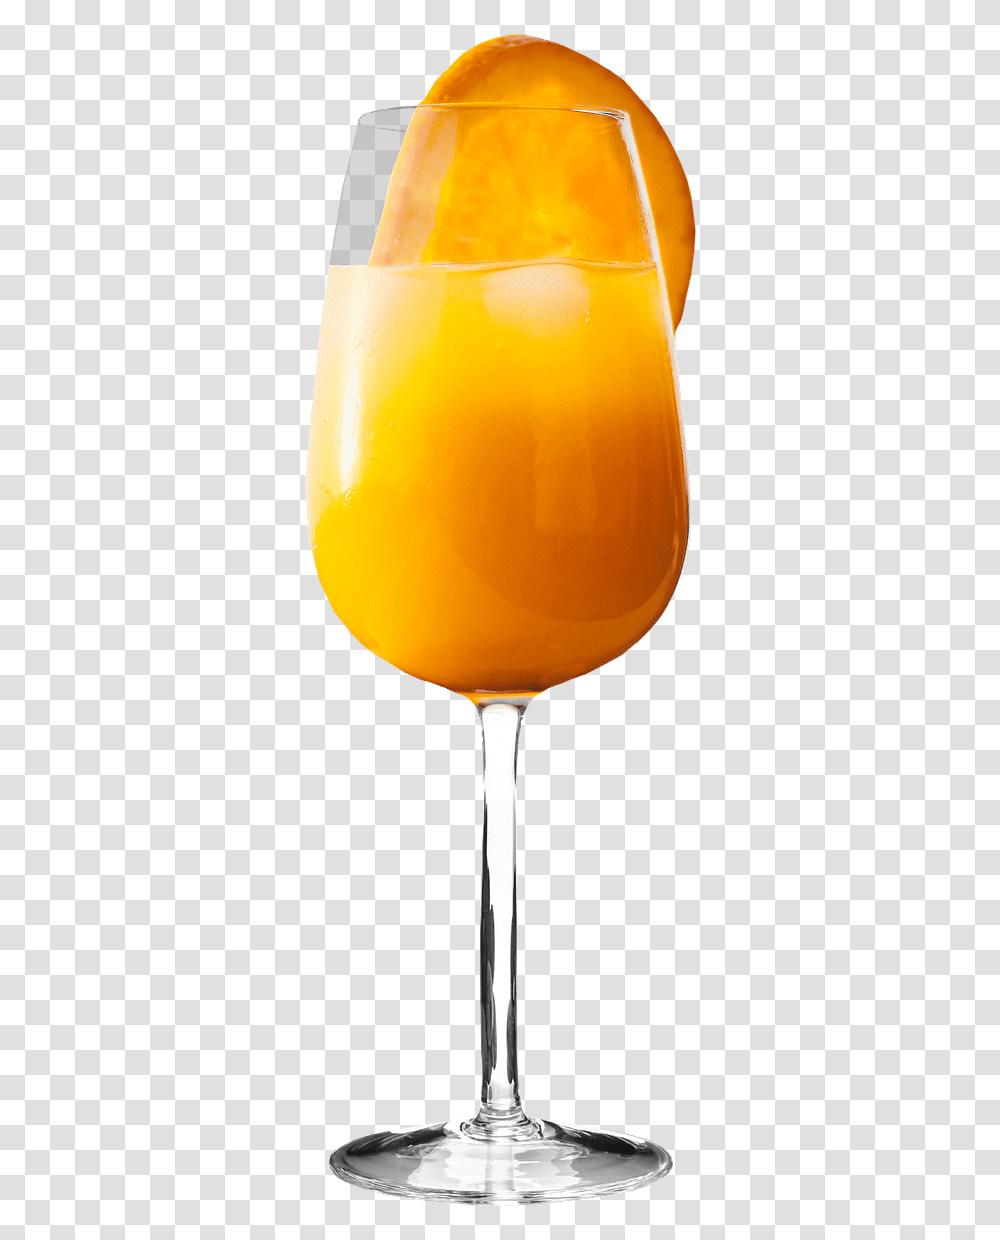 Download Orange Juice With Fruit Slice Orange Juice In Wine Glass, Lamp, Beverage, Drink, Alcohol Transparent Png